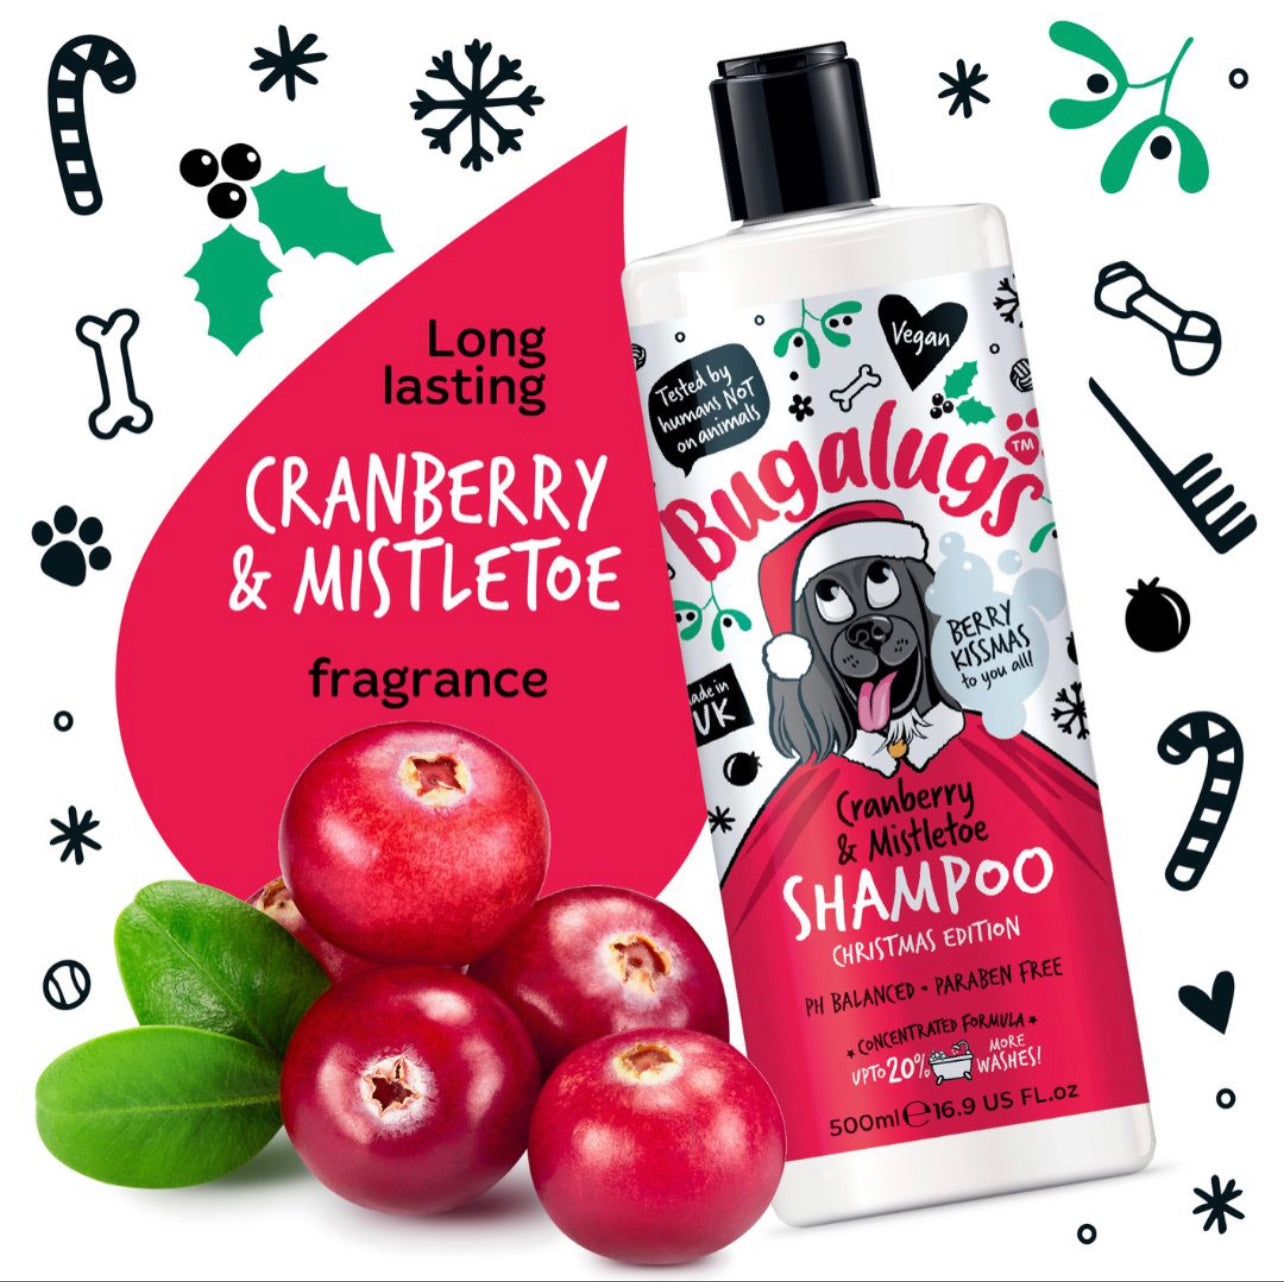 Bugalugs- Cranberry & Mistletoe Shampoo 200ML